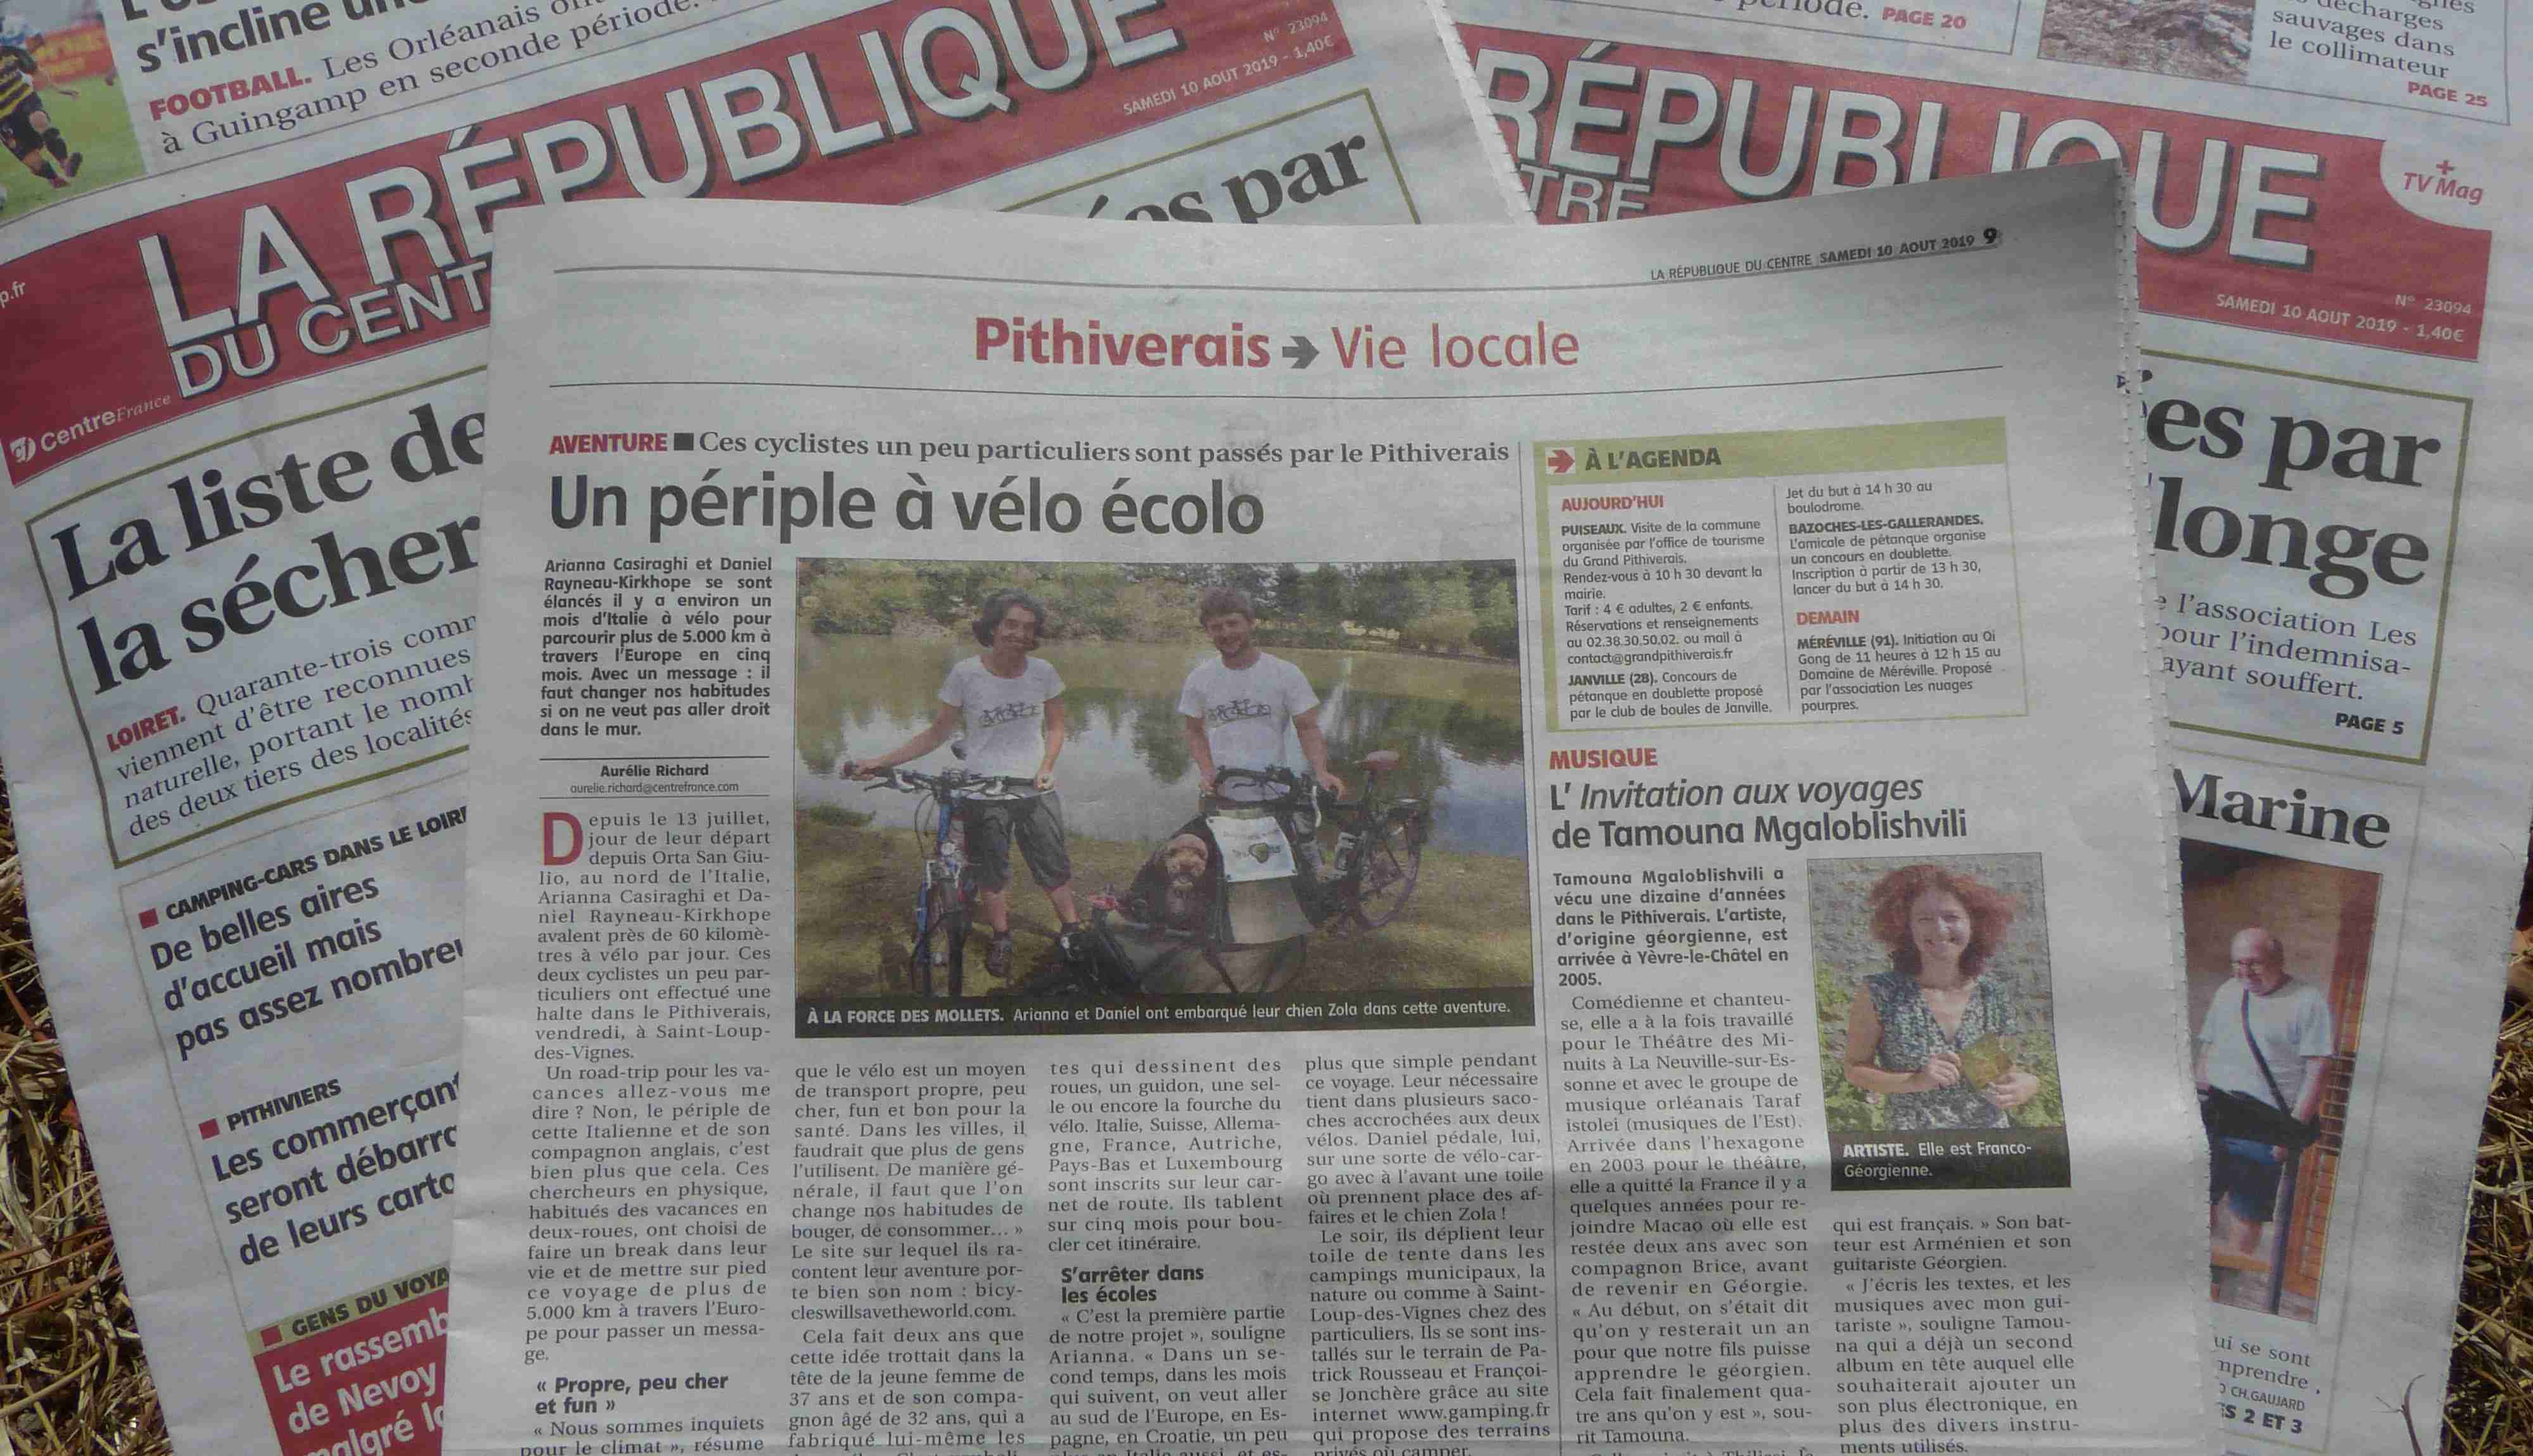 Featuring in an article of the French newspaper La République du Centre